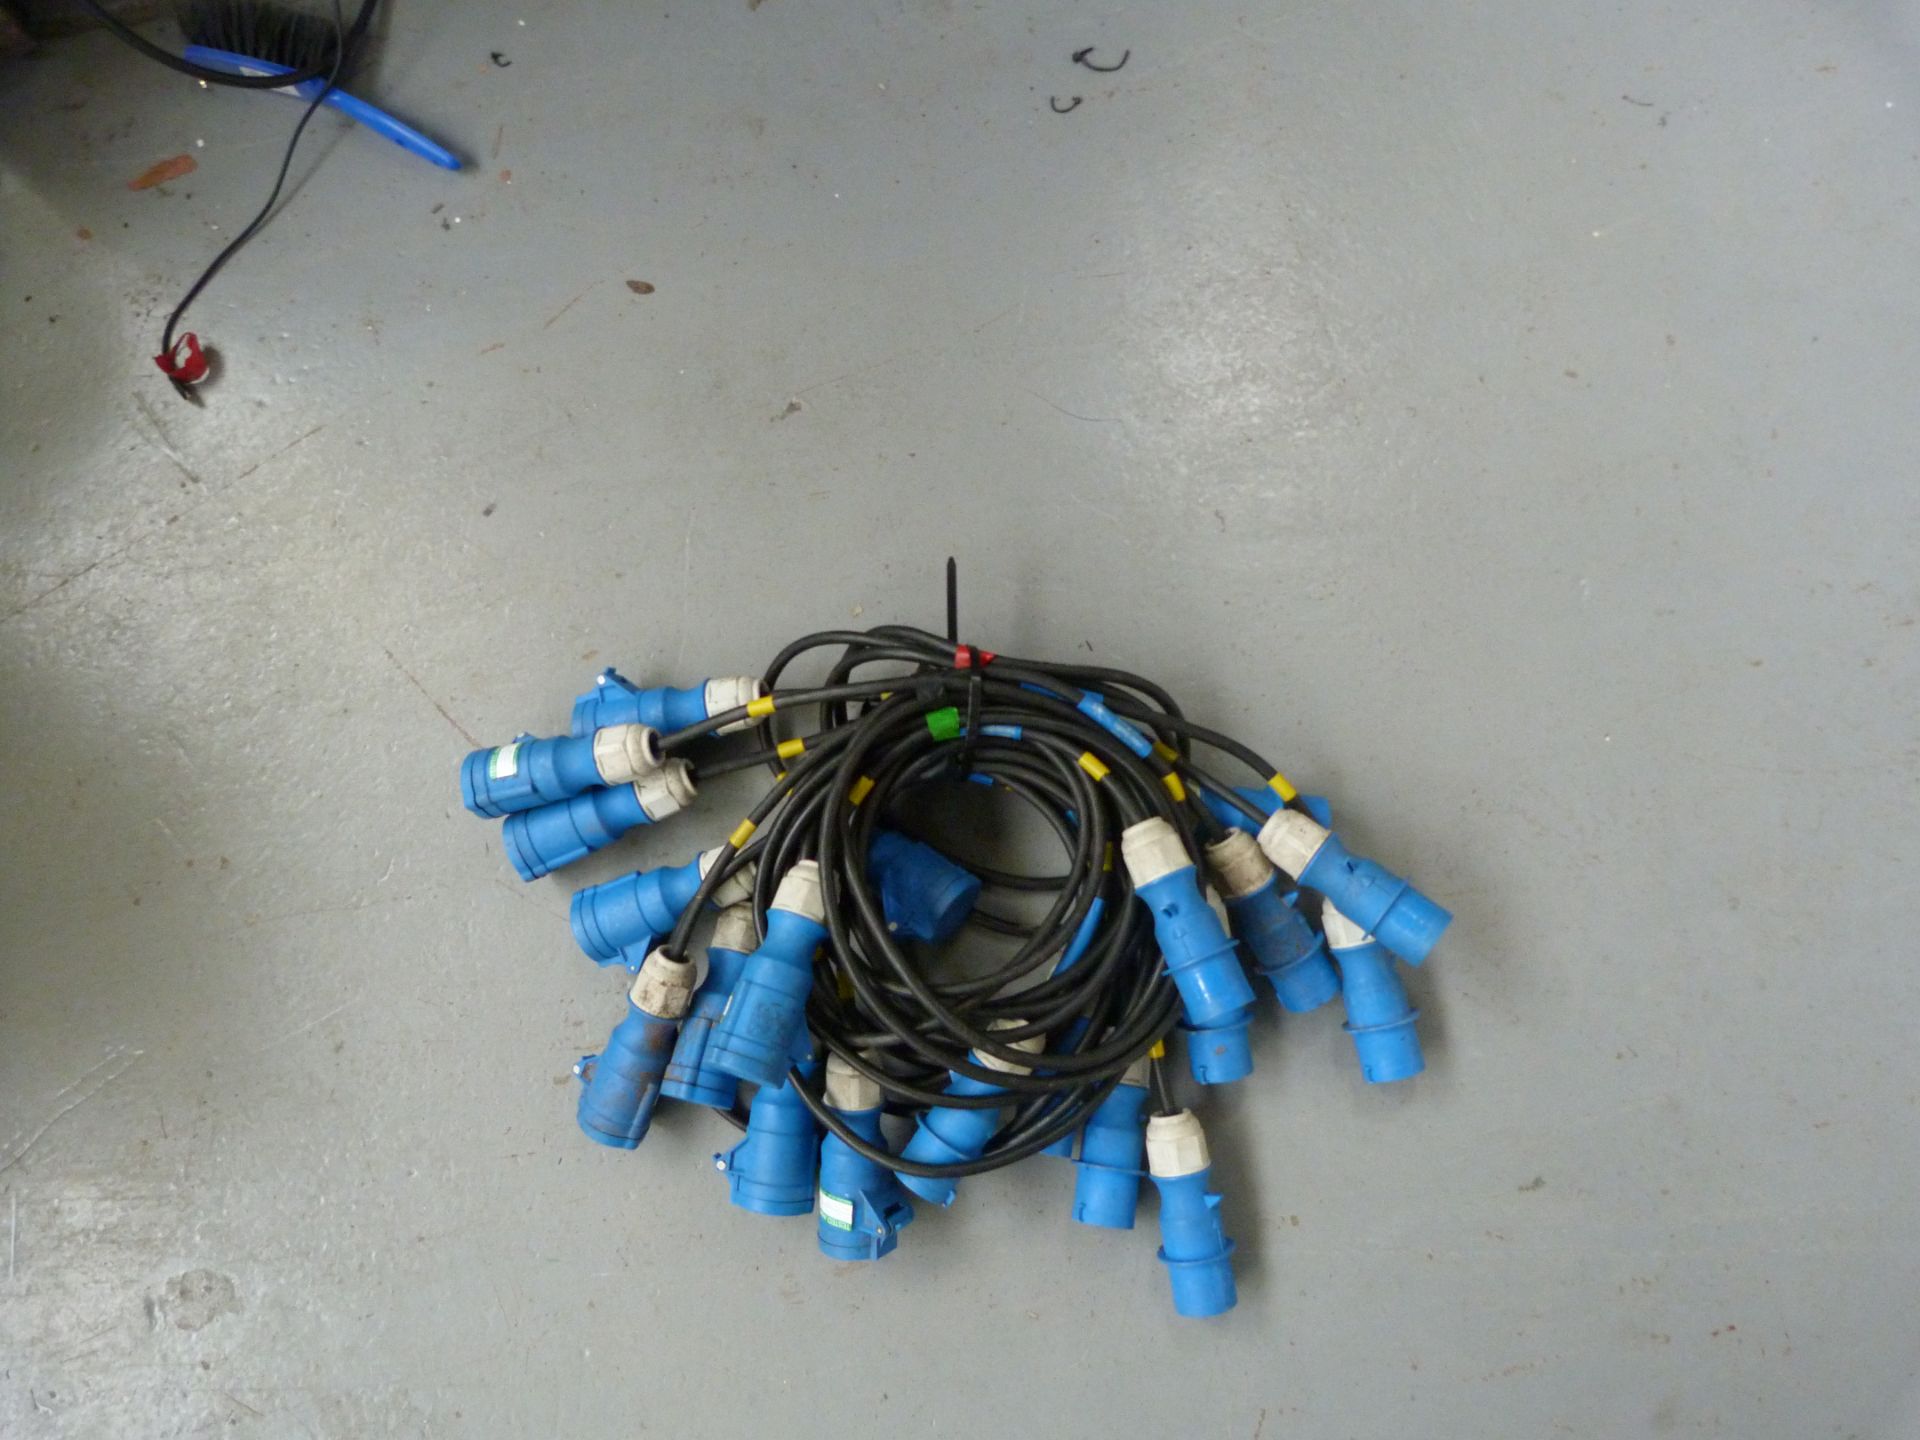 10x 2m 16A Cable HO7 - 1.5mm Blue Connectors. Ex-hire/Fair Condition. Photo Representative - Image 2 of 3